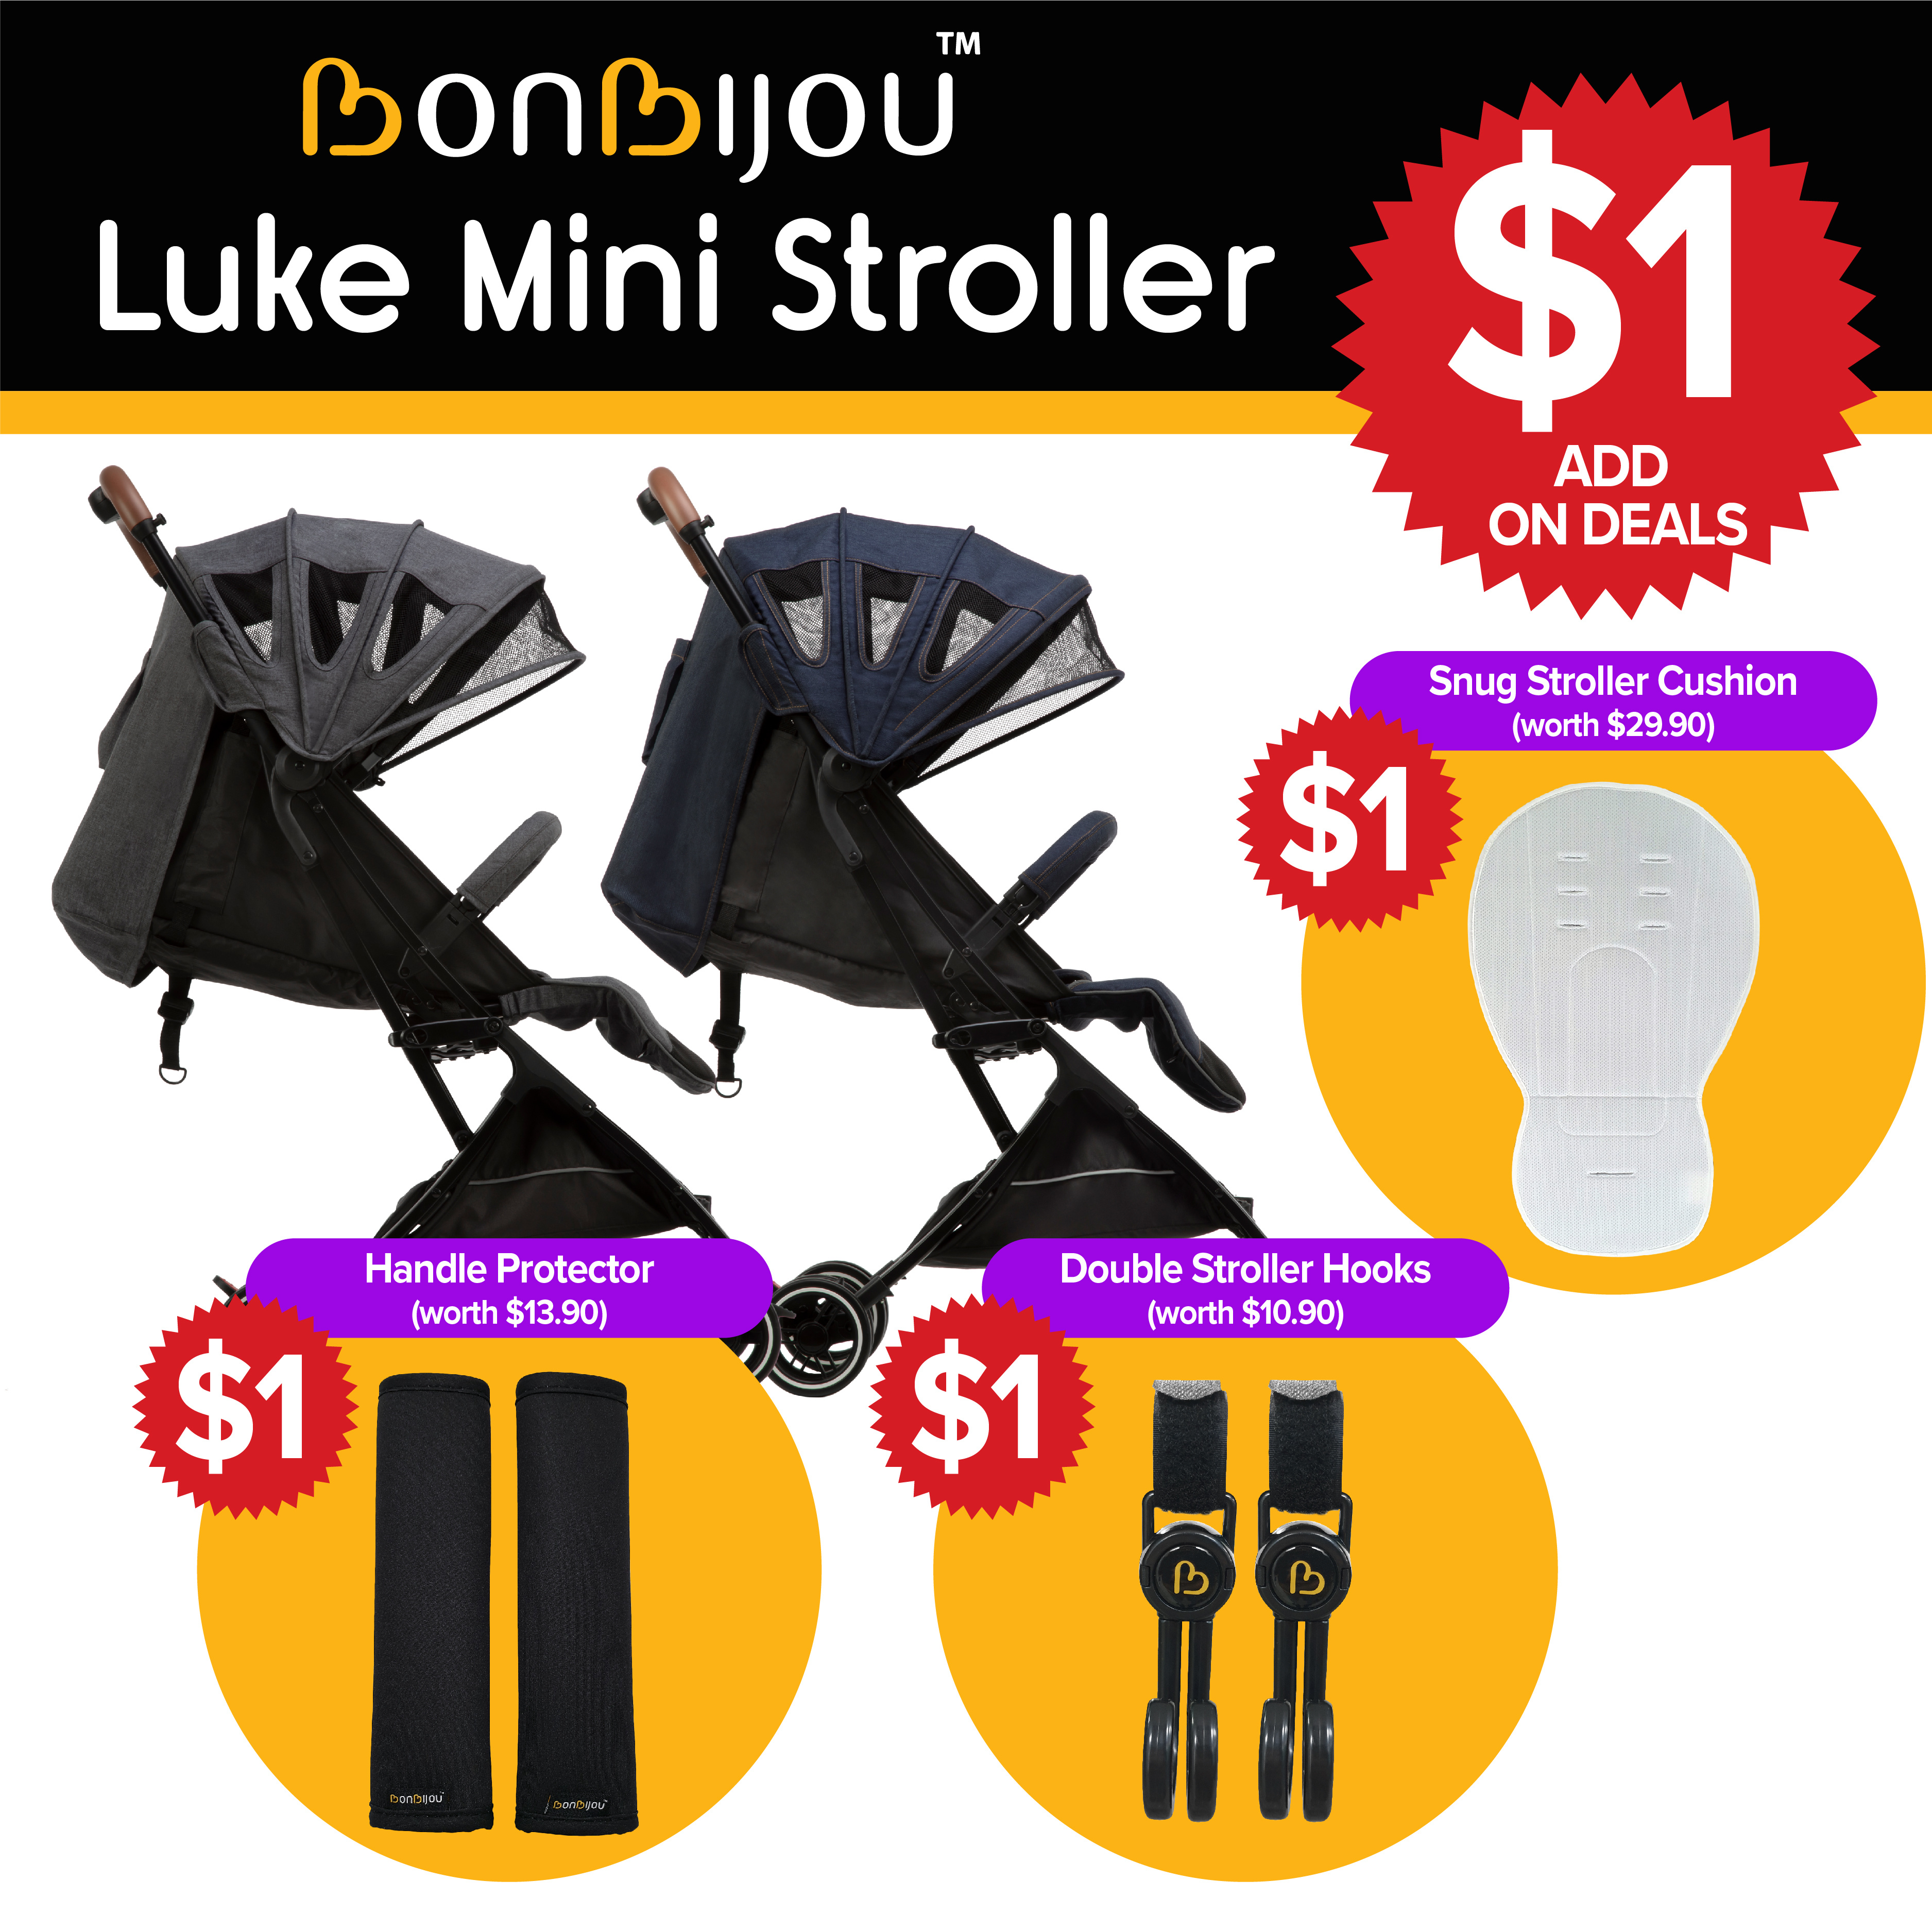 bonbijou luke mini stroller review